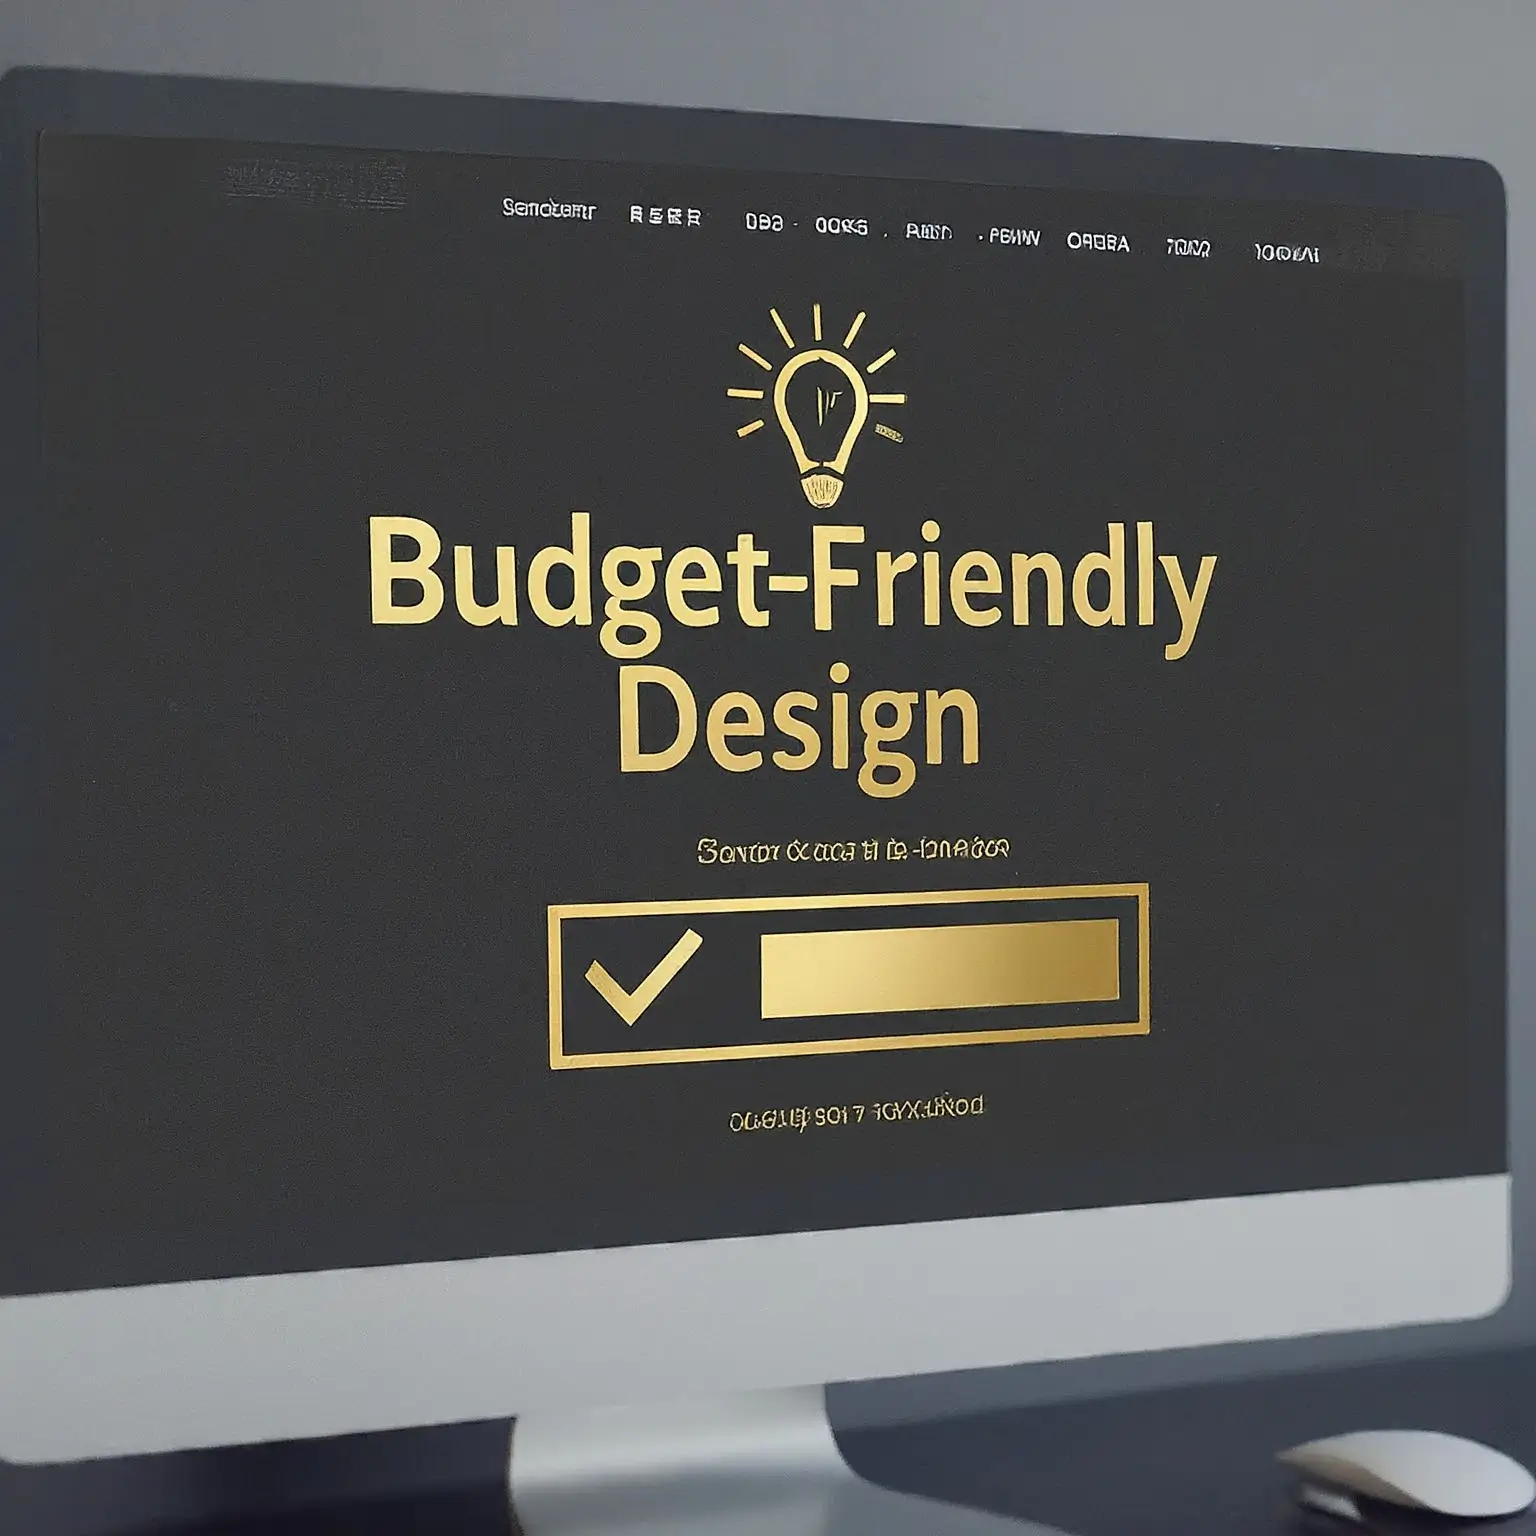 A screen showing budget friendly web design